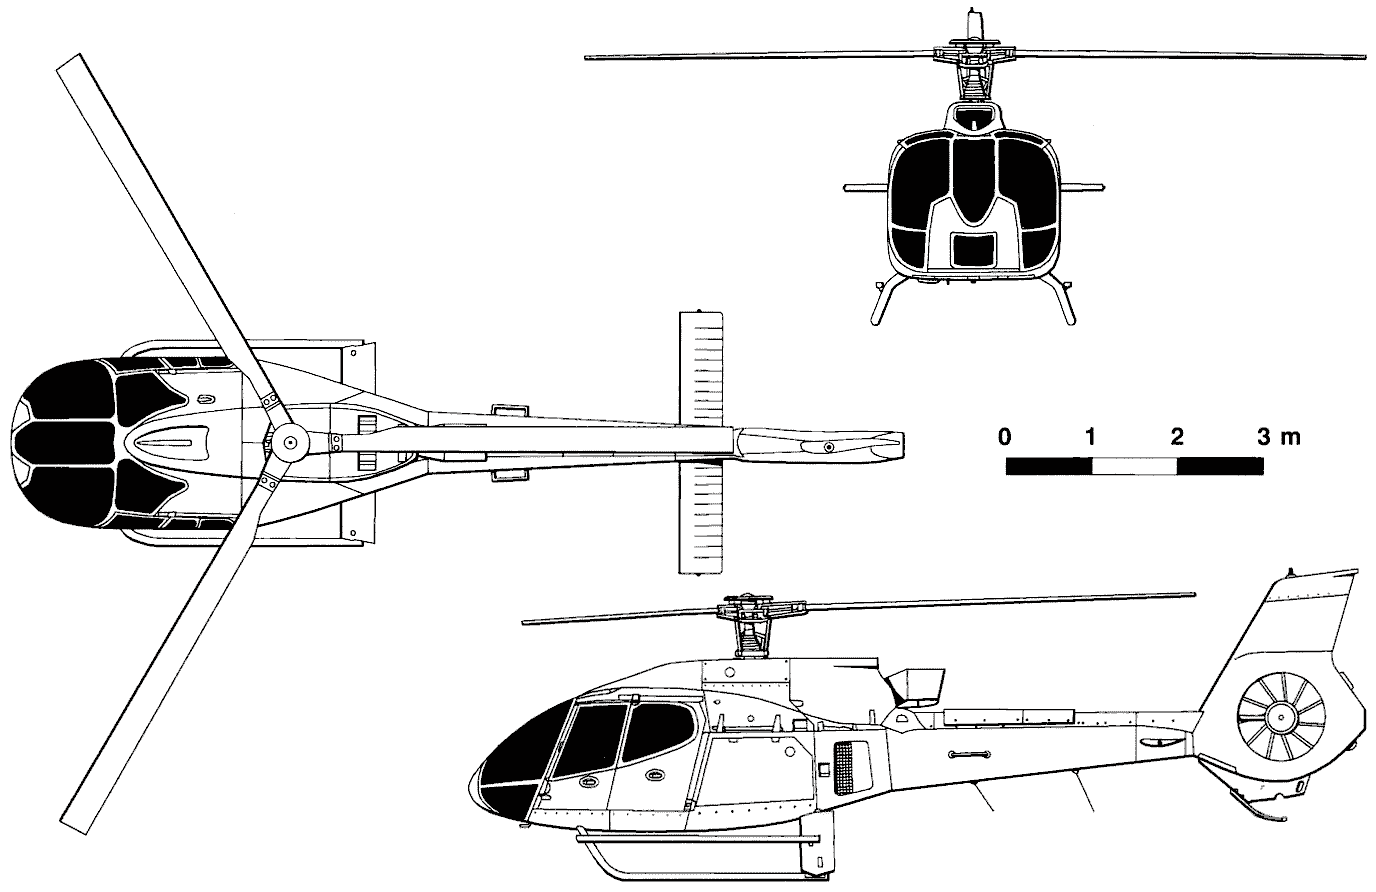 Eurocopter EC130 blueprint